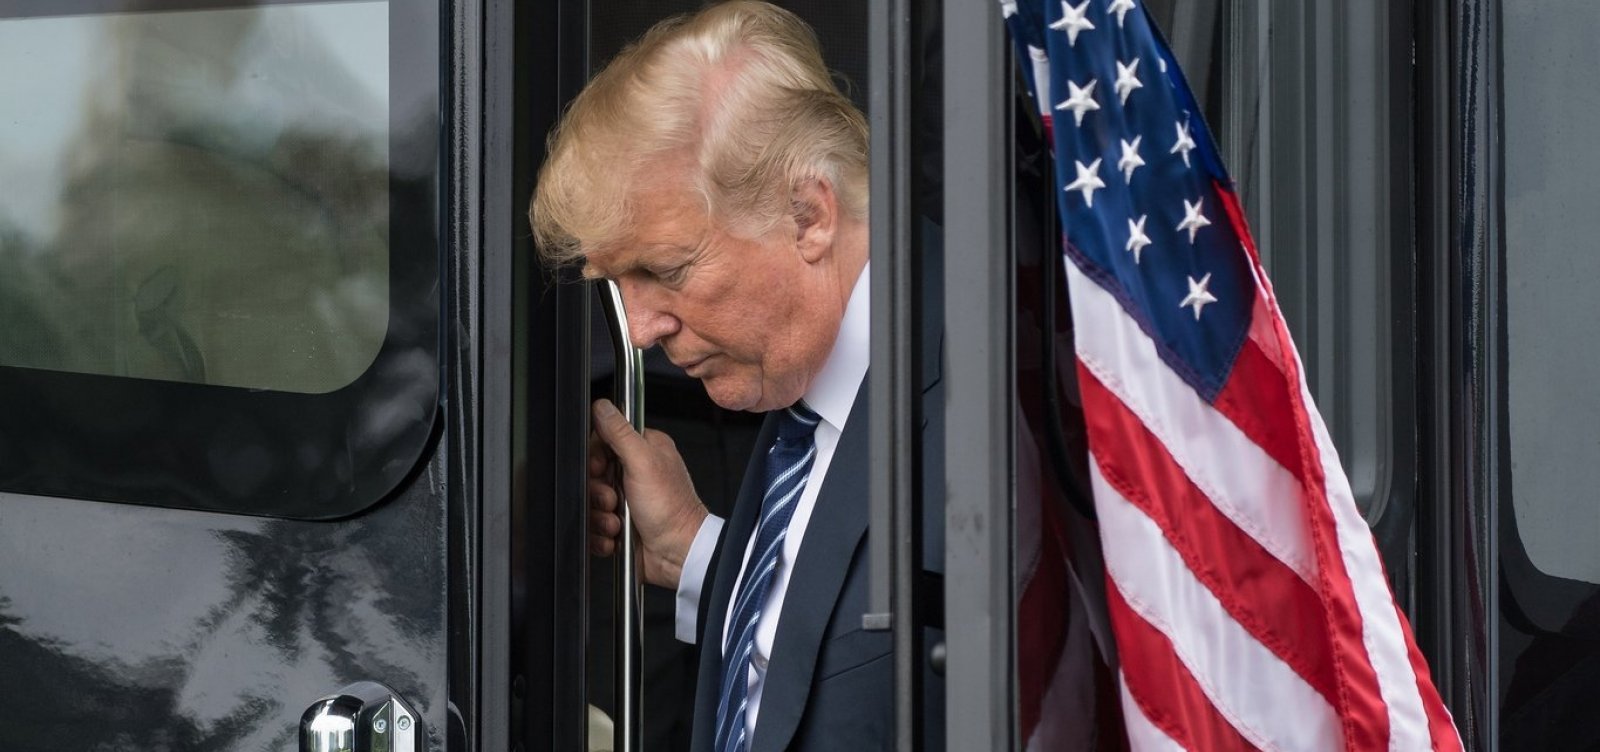 Trump vai declarar emergência nacional para financiar muro, diz Casa Branca